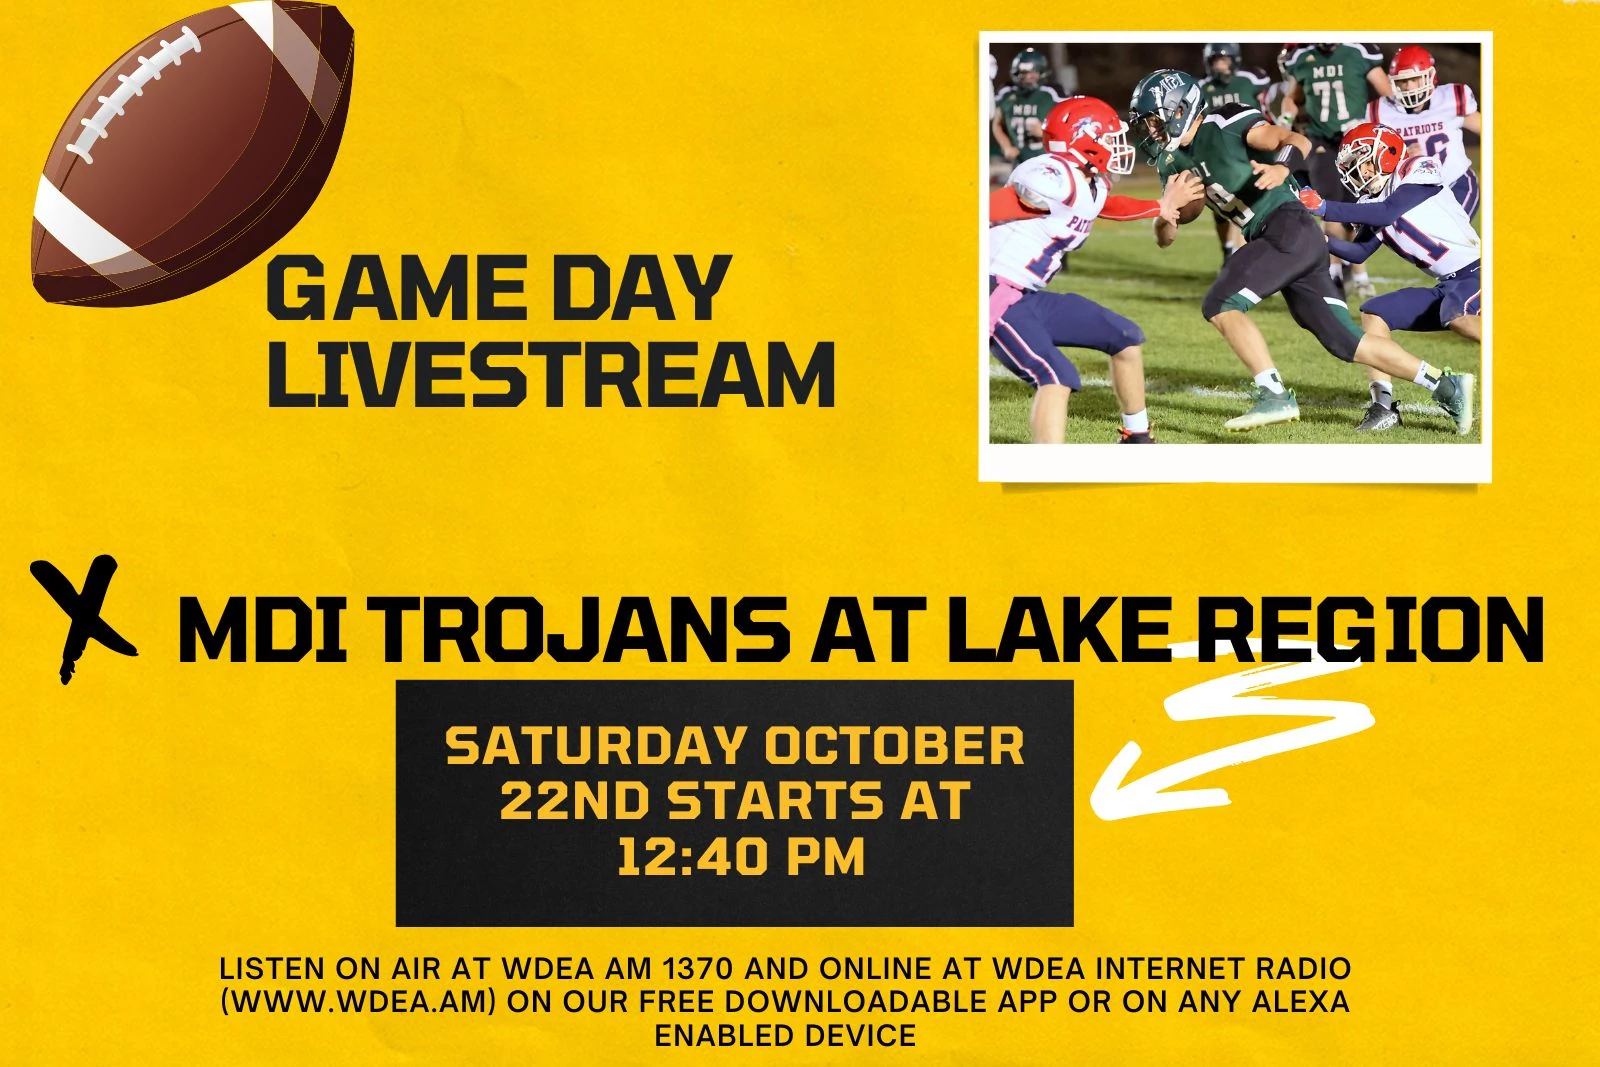 MDI Trojans at Lake Region Saturday October 22 [LISTEN LIVE]